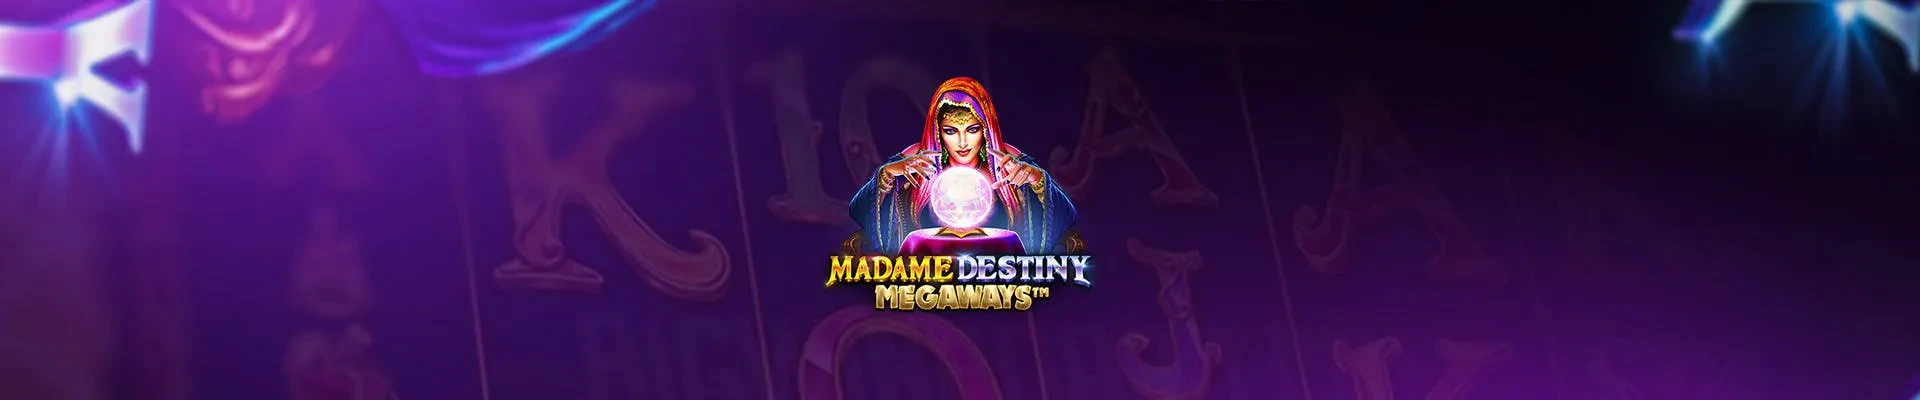 header madame destiny megaways